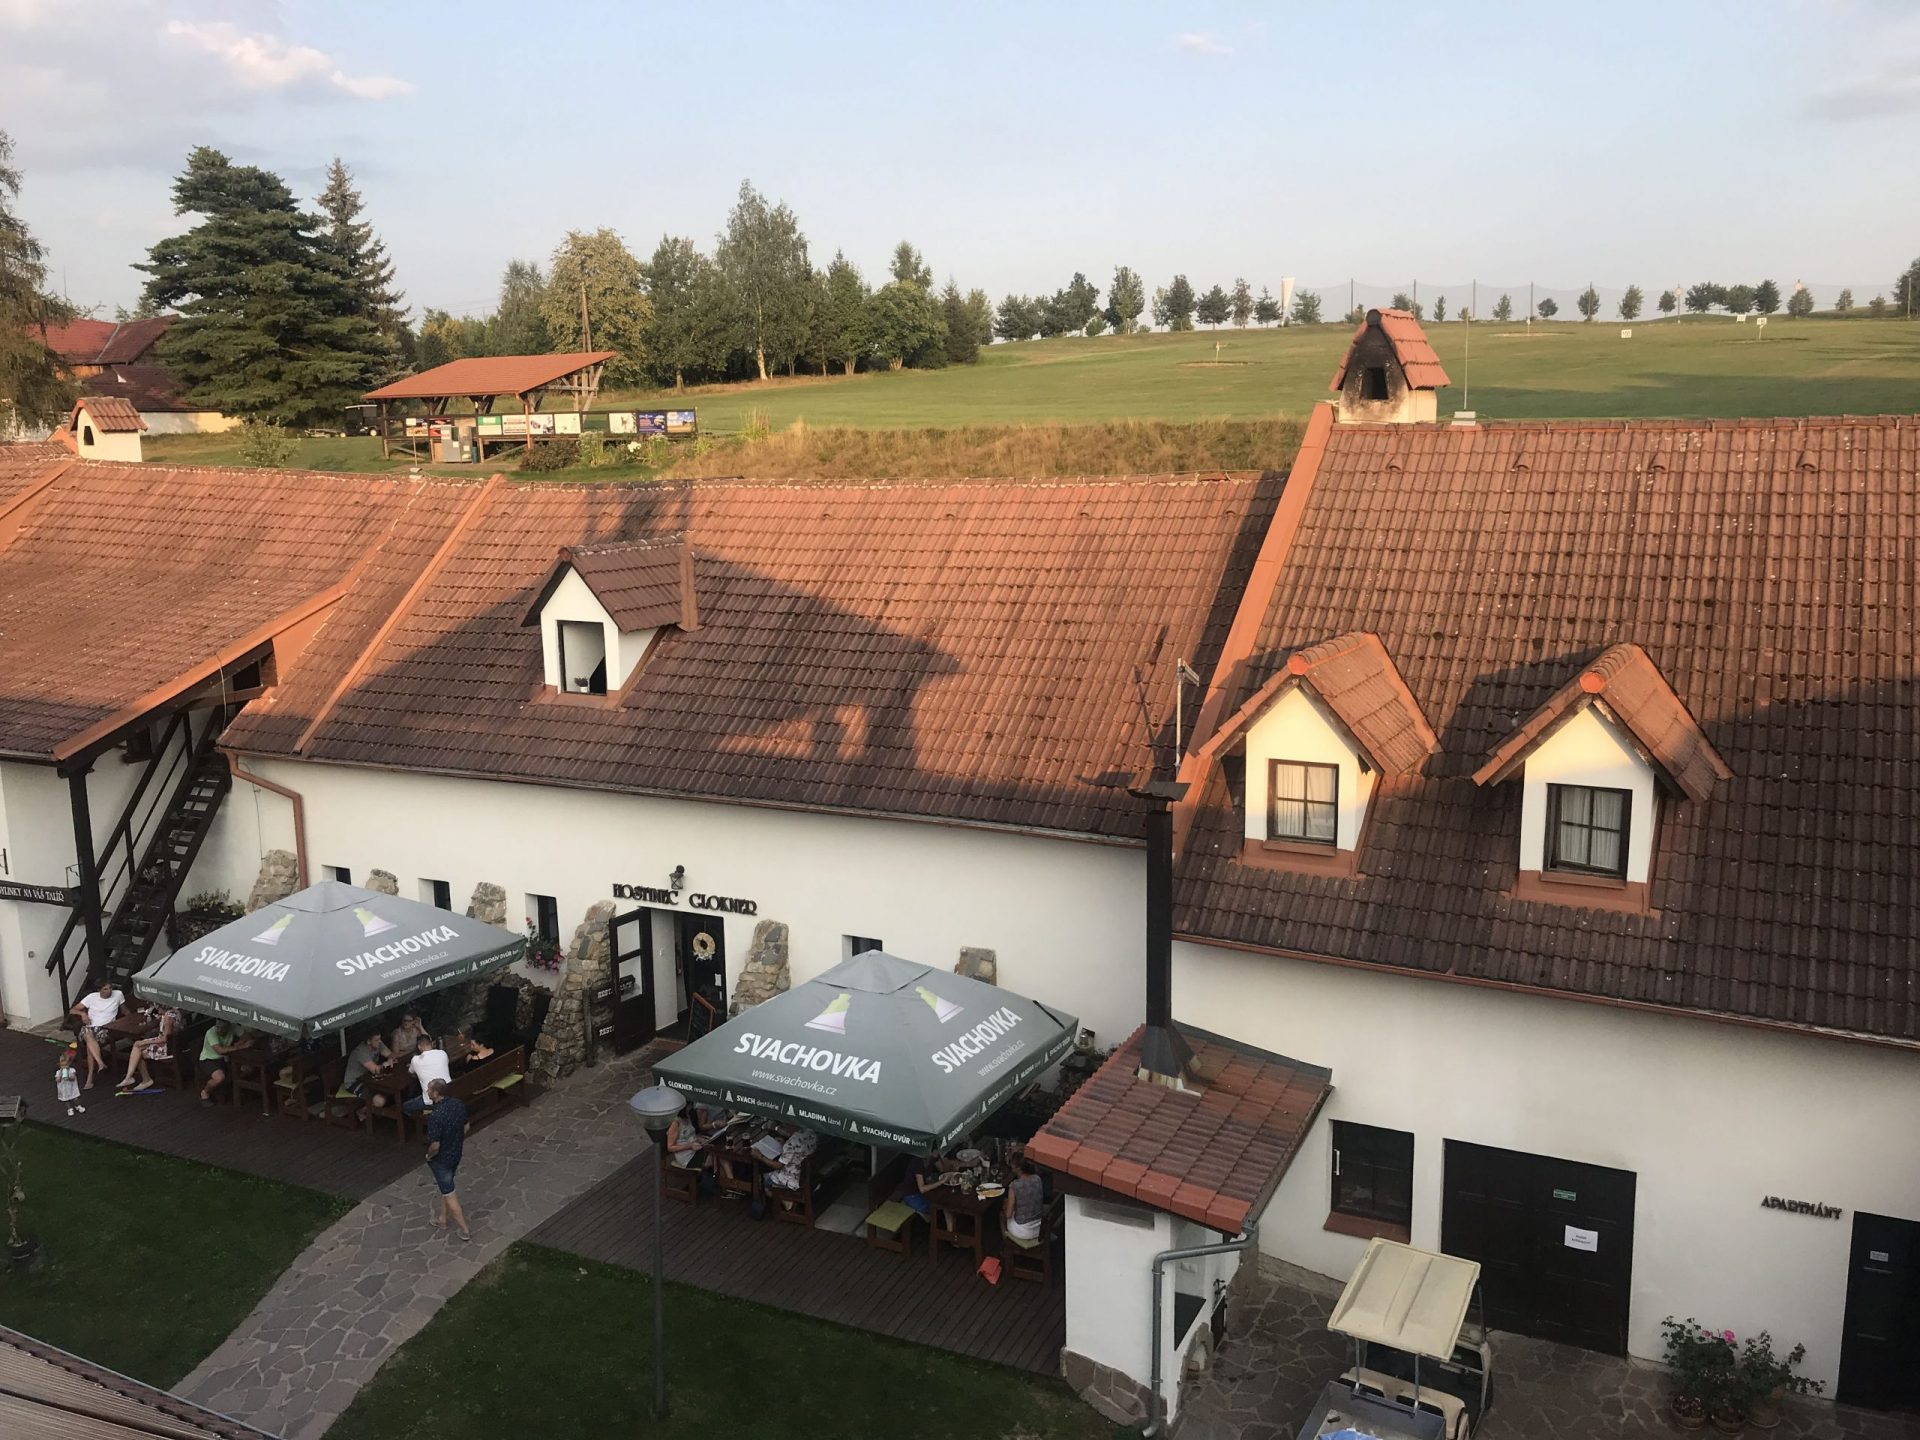 svachovka hotel resort golf course scaled - Svachovka Resort near Cesky Krumlov, Czech Republic